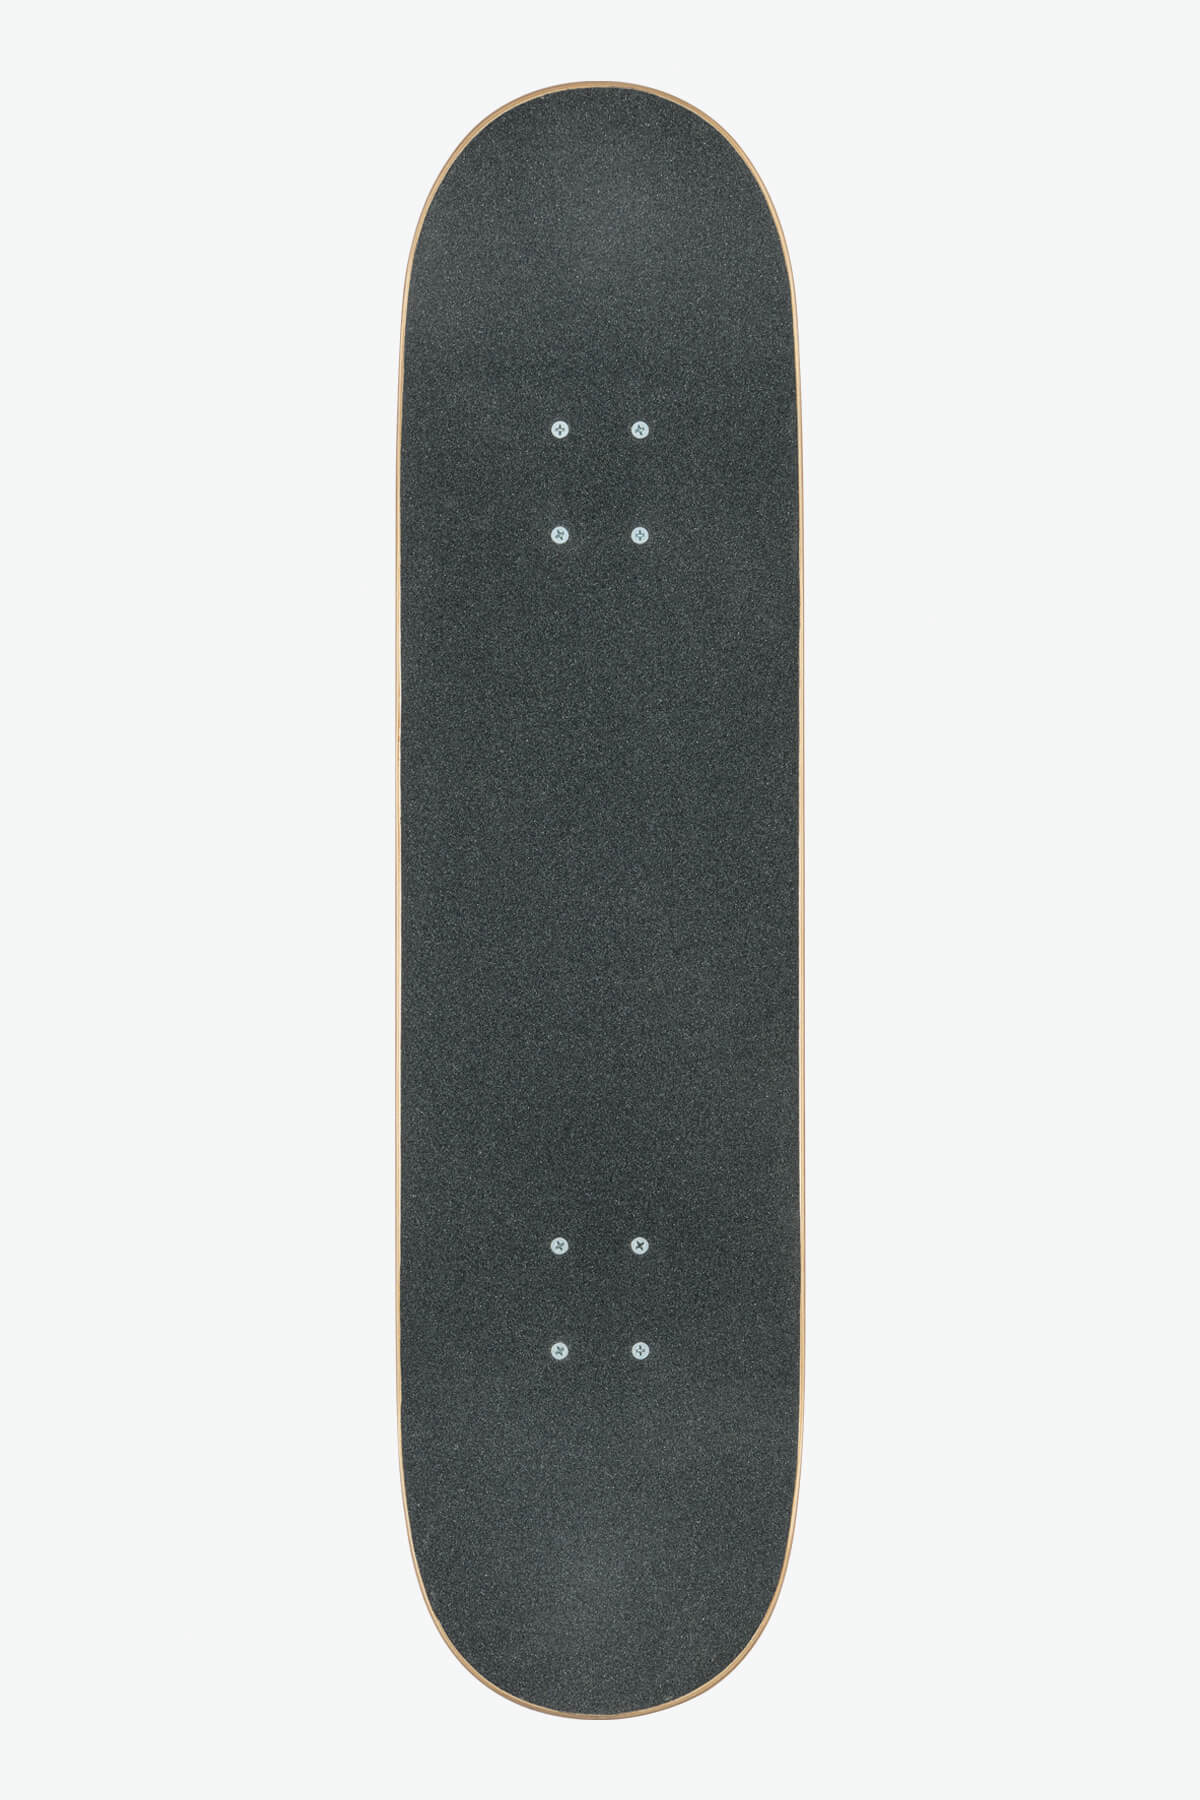 Globe - G0 Fubar - Haze/Off-White - 7.75" Complete Skateboard